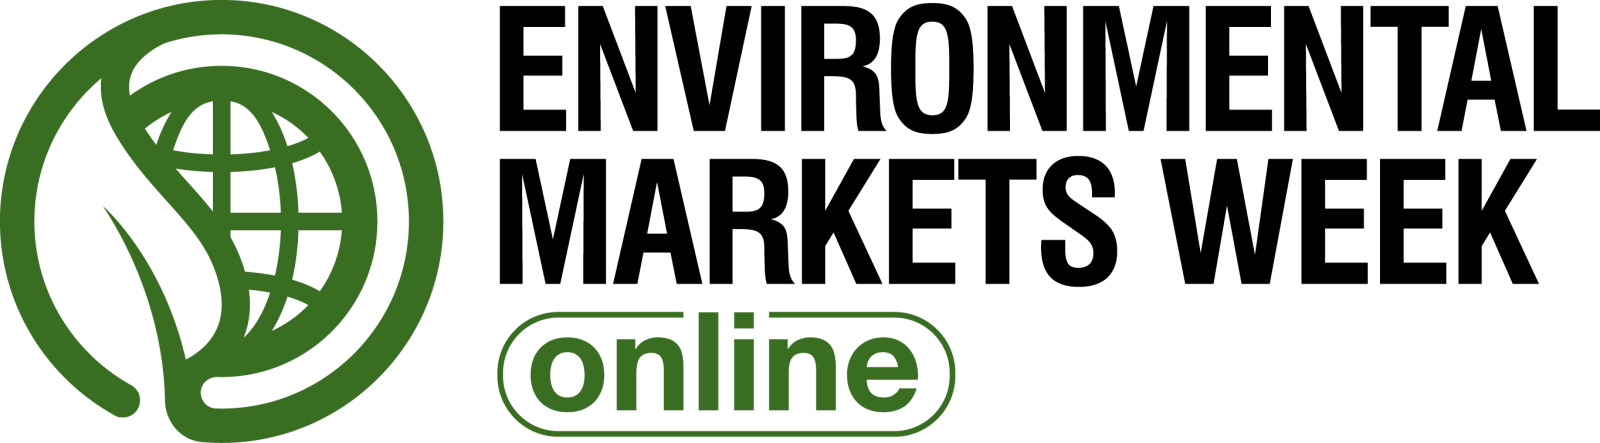 Environmental-Markets-Week_Online_pos